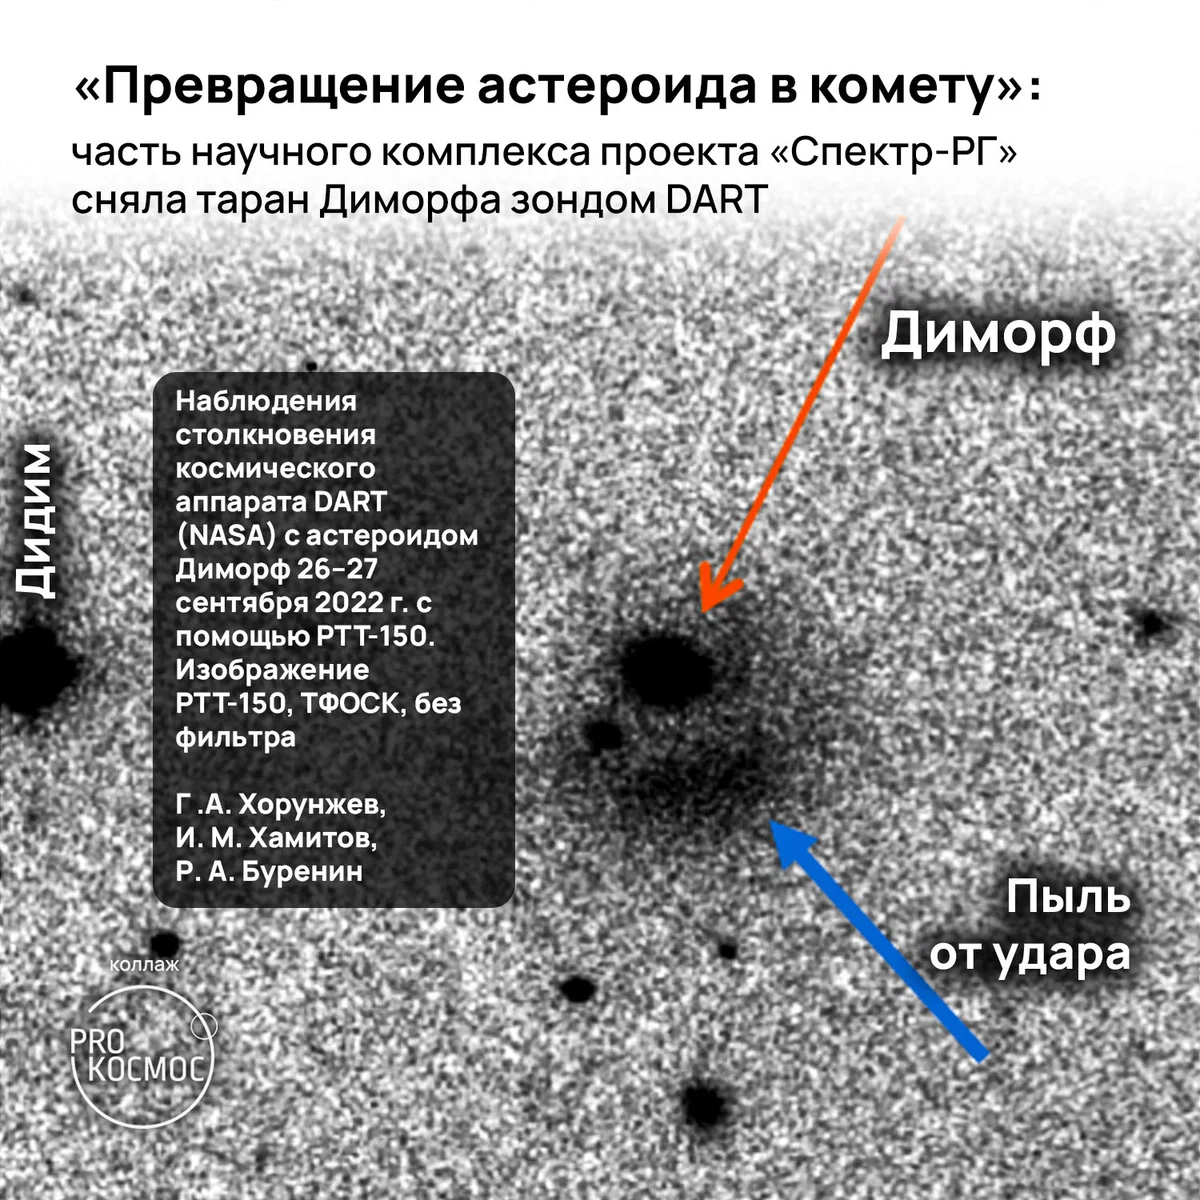 «Превращение астероида в комету»: часть научного комплекса проекта «Спектр-РГ» сняла таран Диморфа зондом DART height=1200px width=1200px